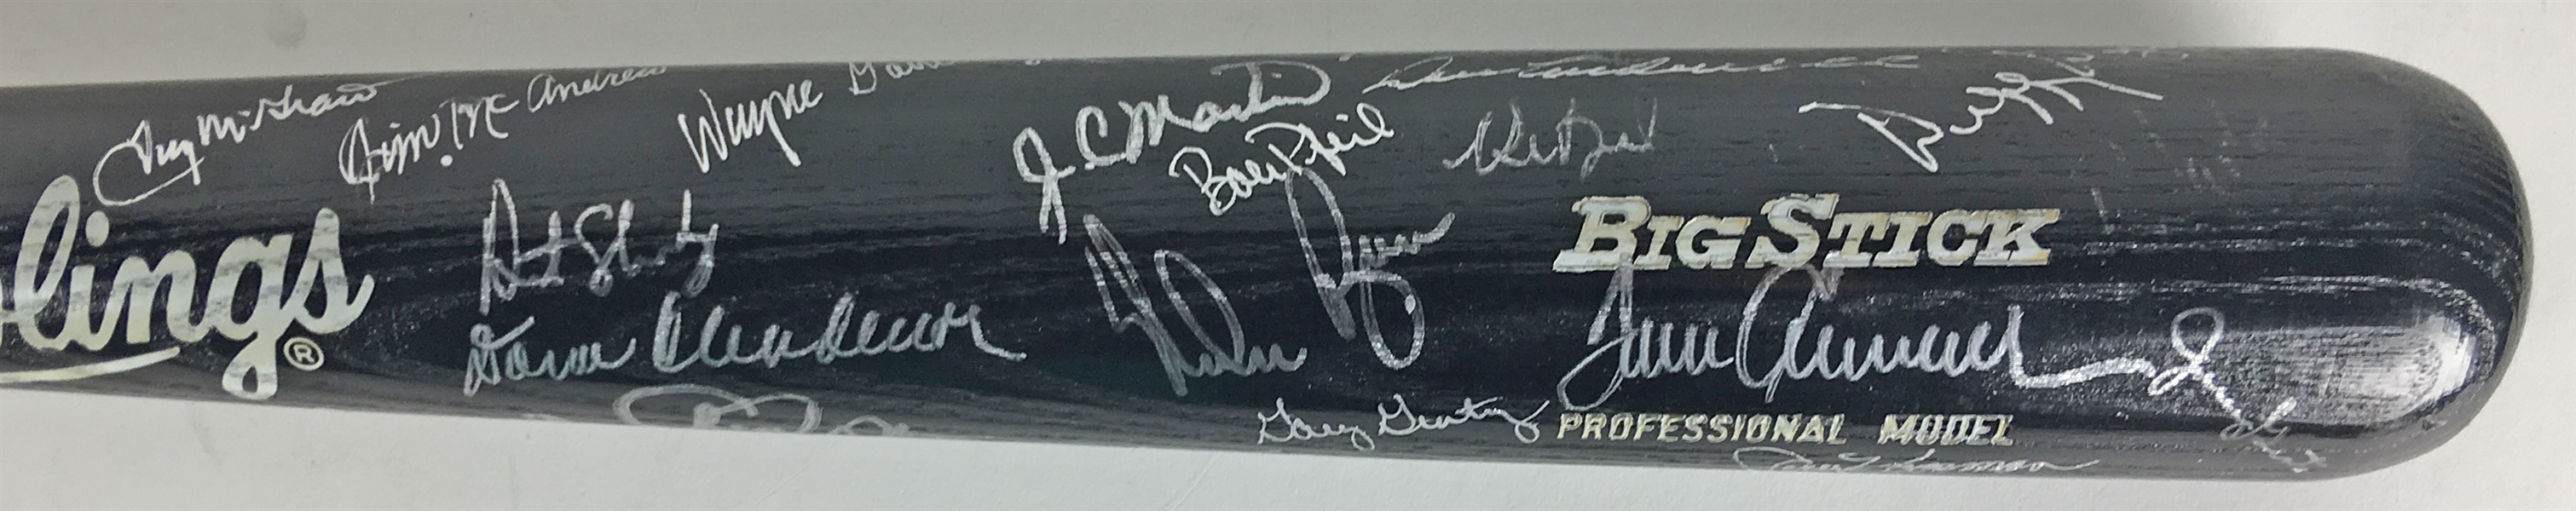 1969 New York Mets Team Signed Baseball Bat w/ Ryan, Seaver, Koosman (JSA)